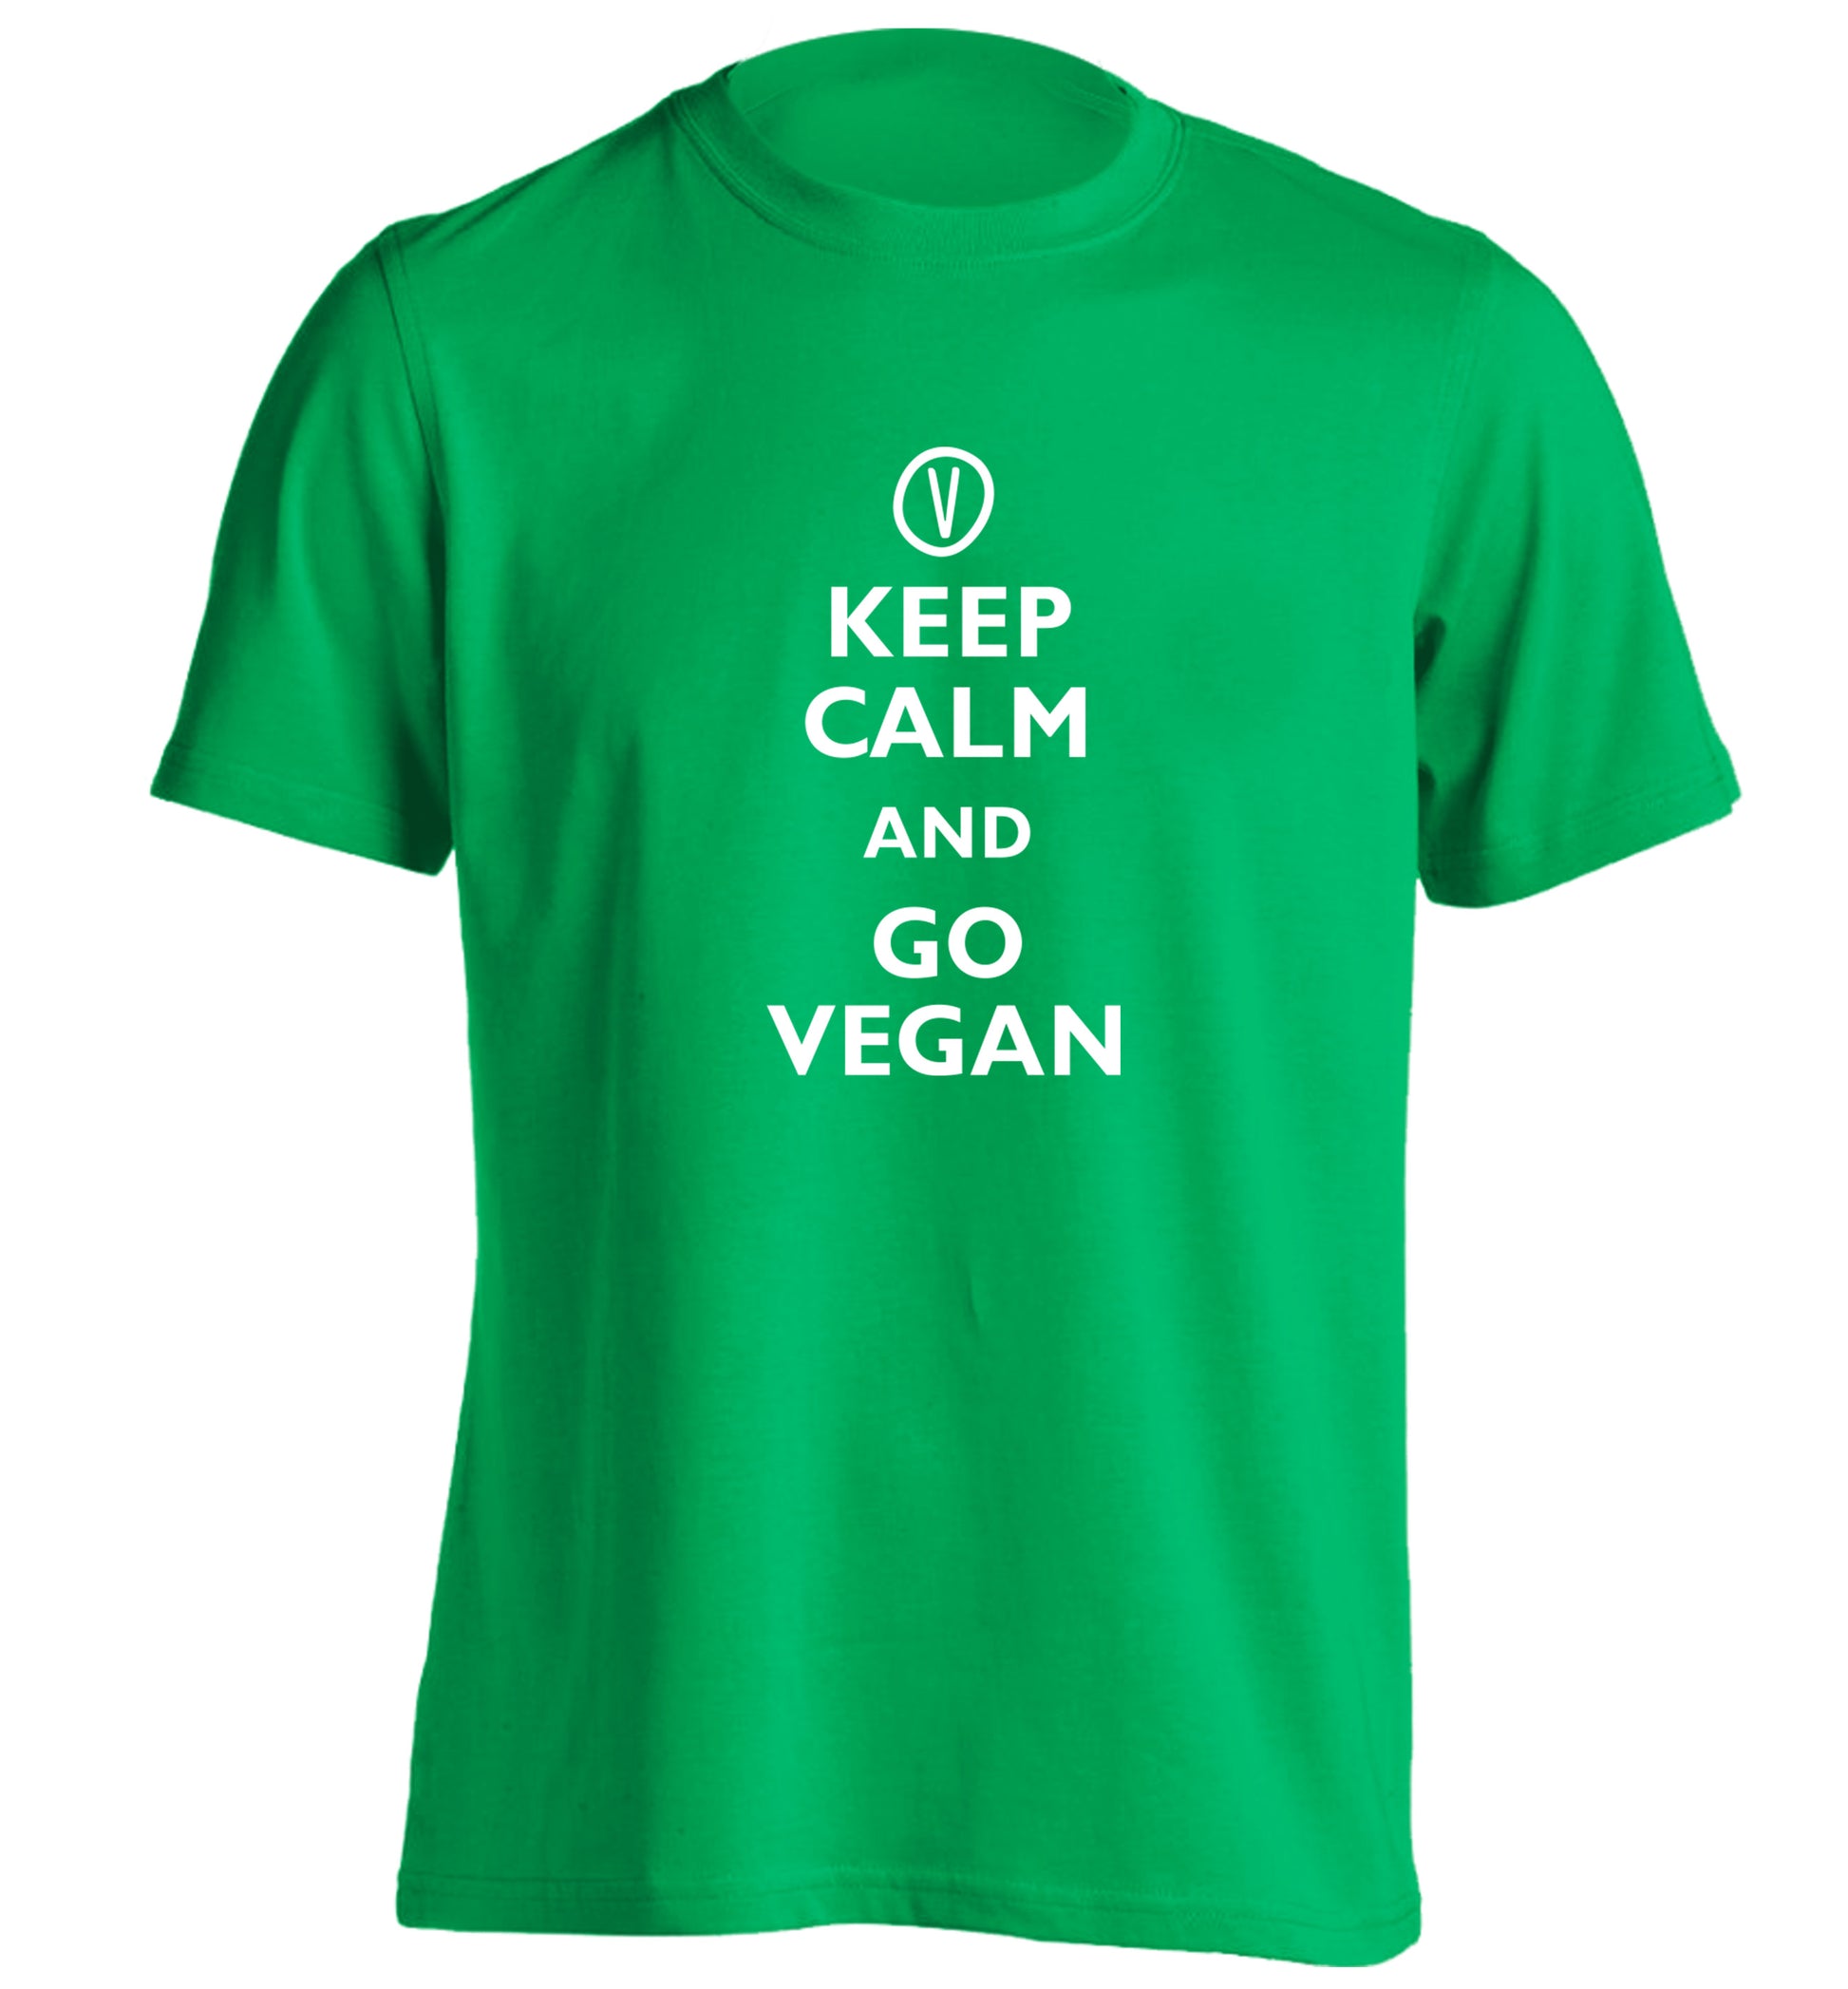 Keep calm and go vegan adults unisex green Tshirt 2XL